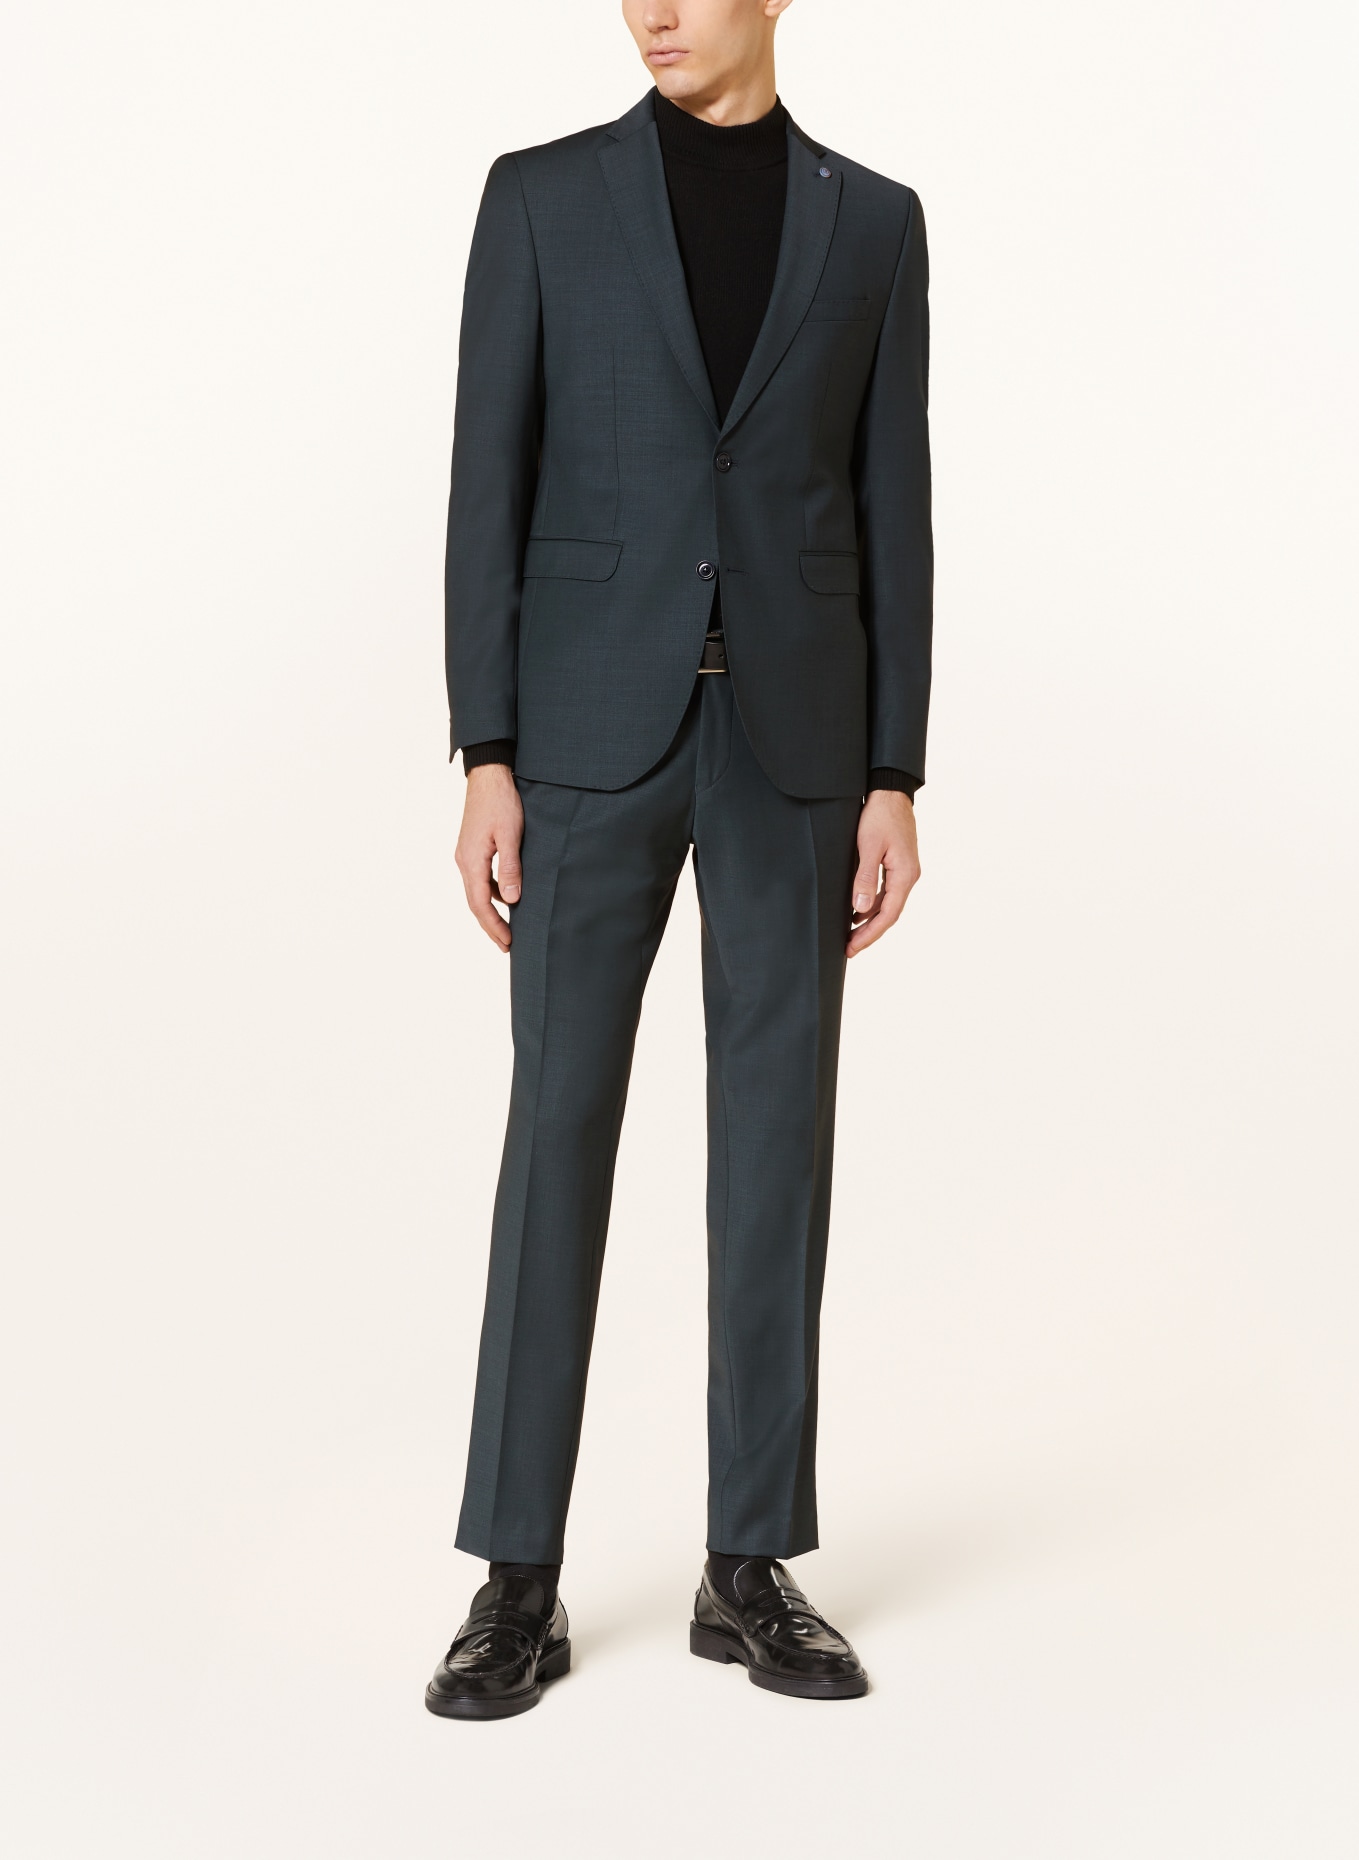 CG - CLUB of GENTS Suit jacket COLVIN slim fit, Color: 53 gruen dunkel (Image 2)